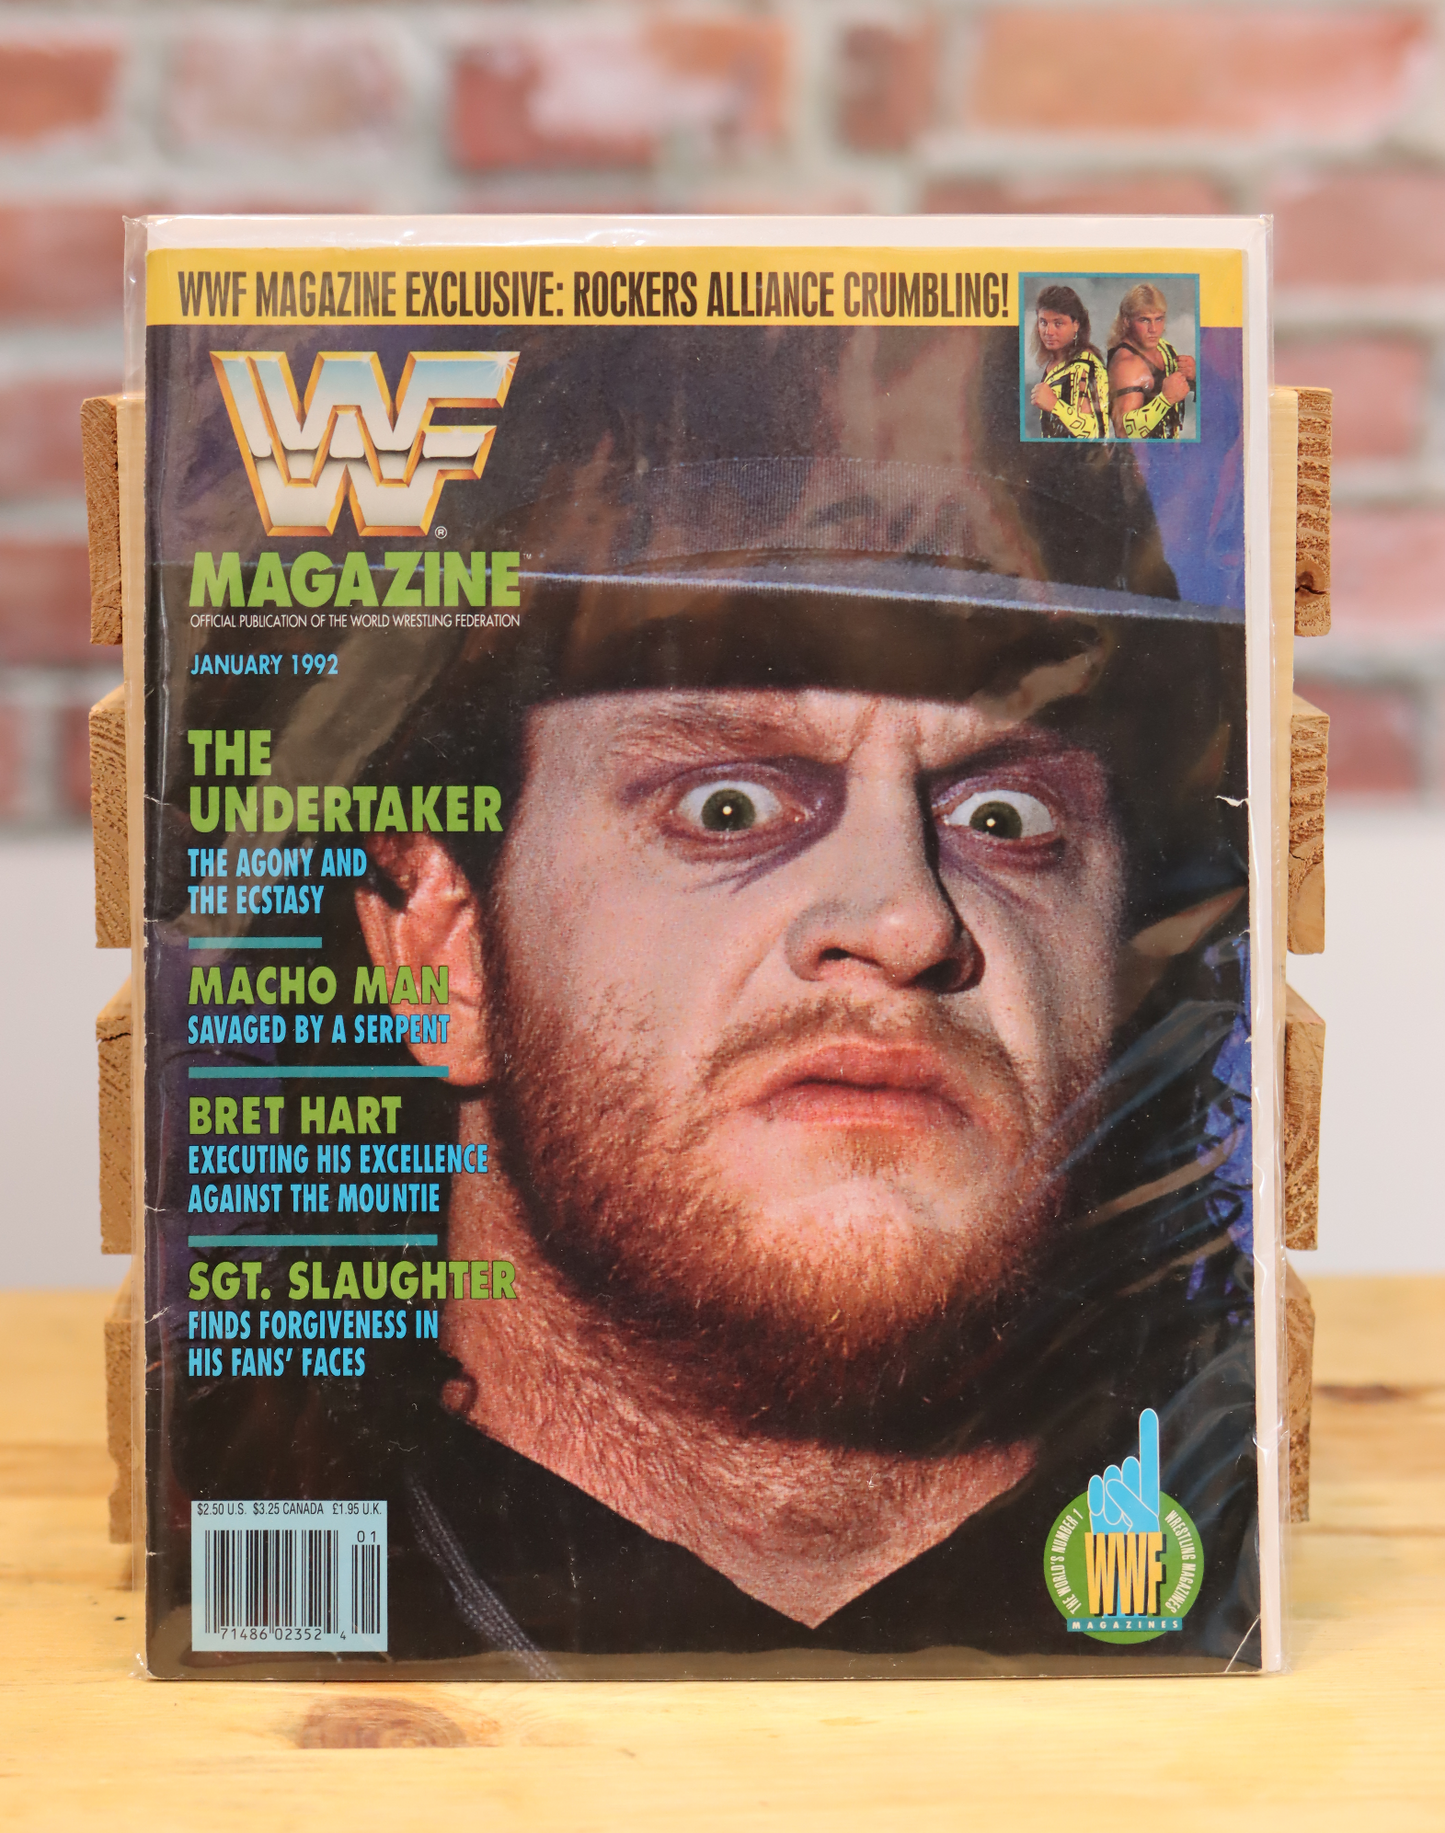 Original WWF WWE Vintage Wrestling Magazine The Undertaker (January 1992)